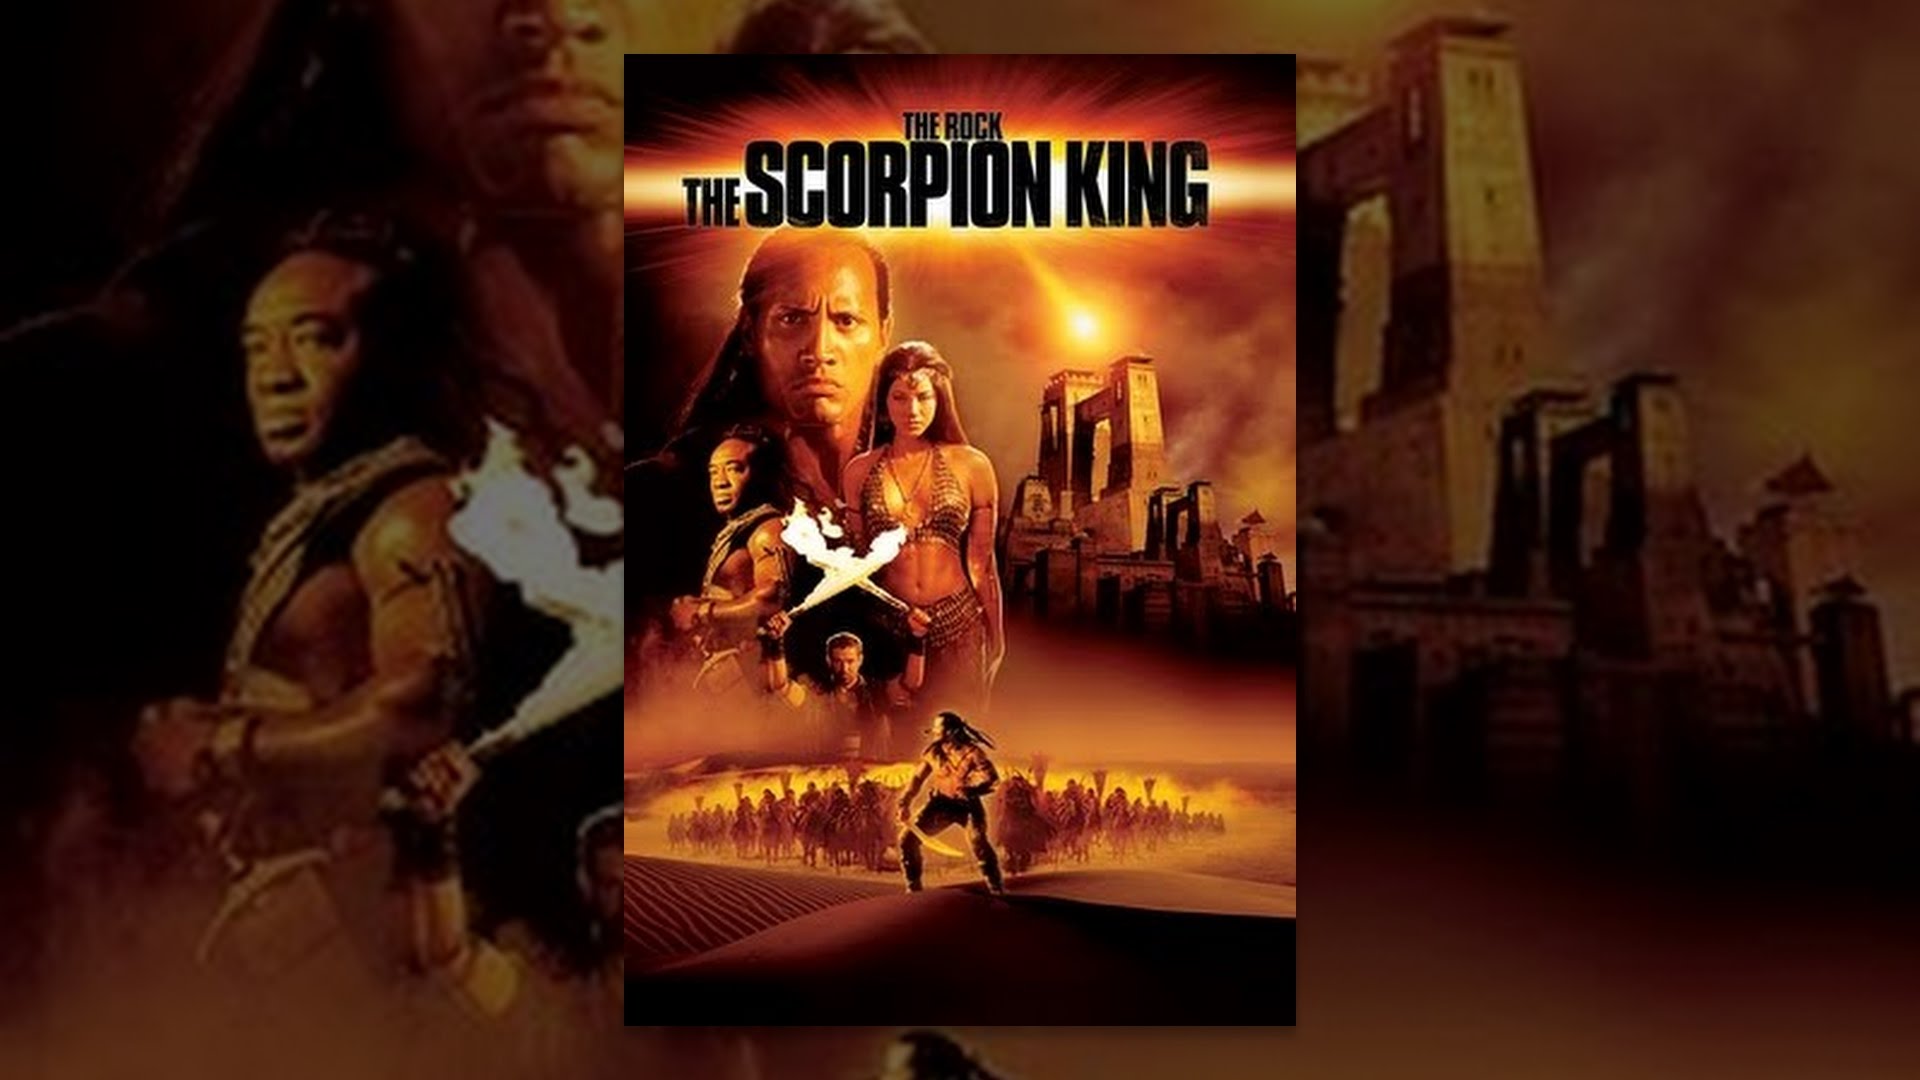 Best of Scorpion king full movie free